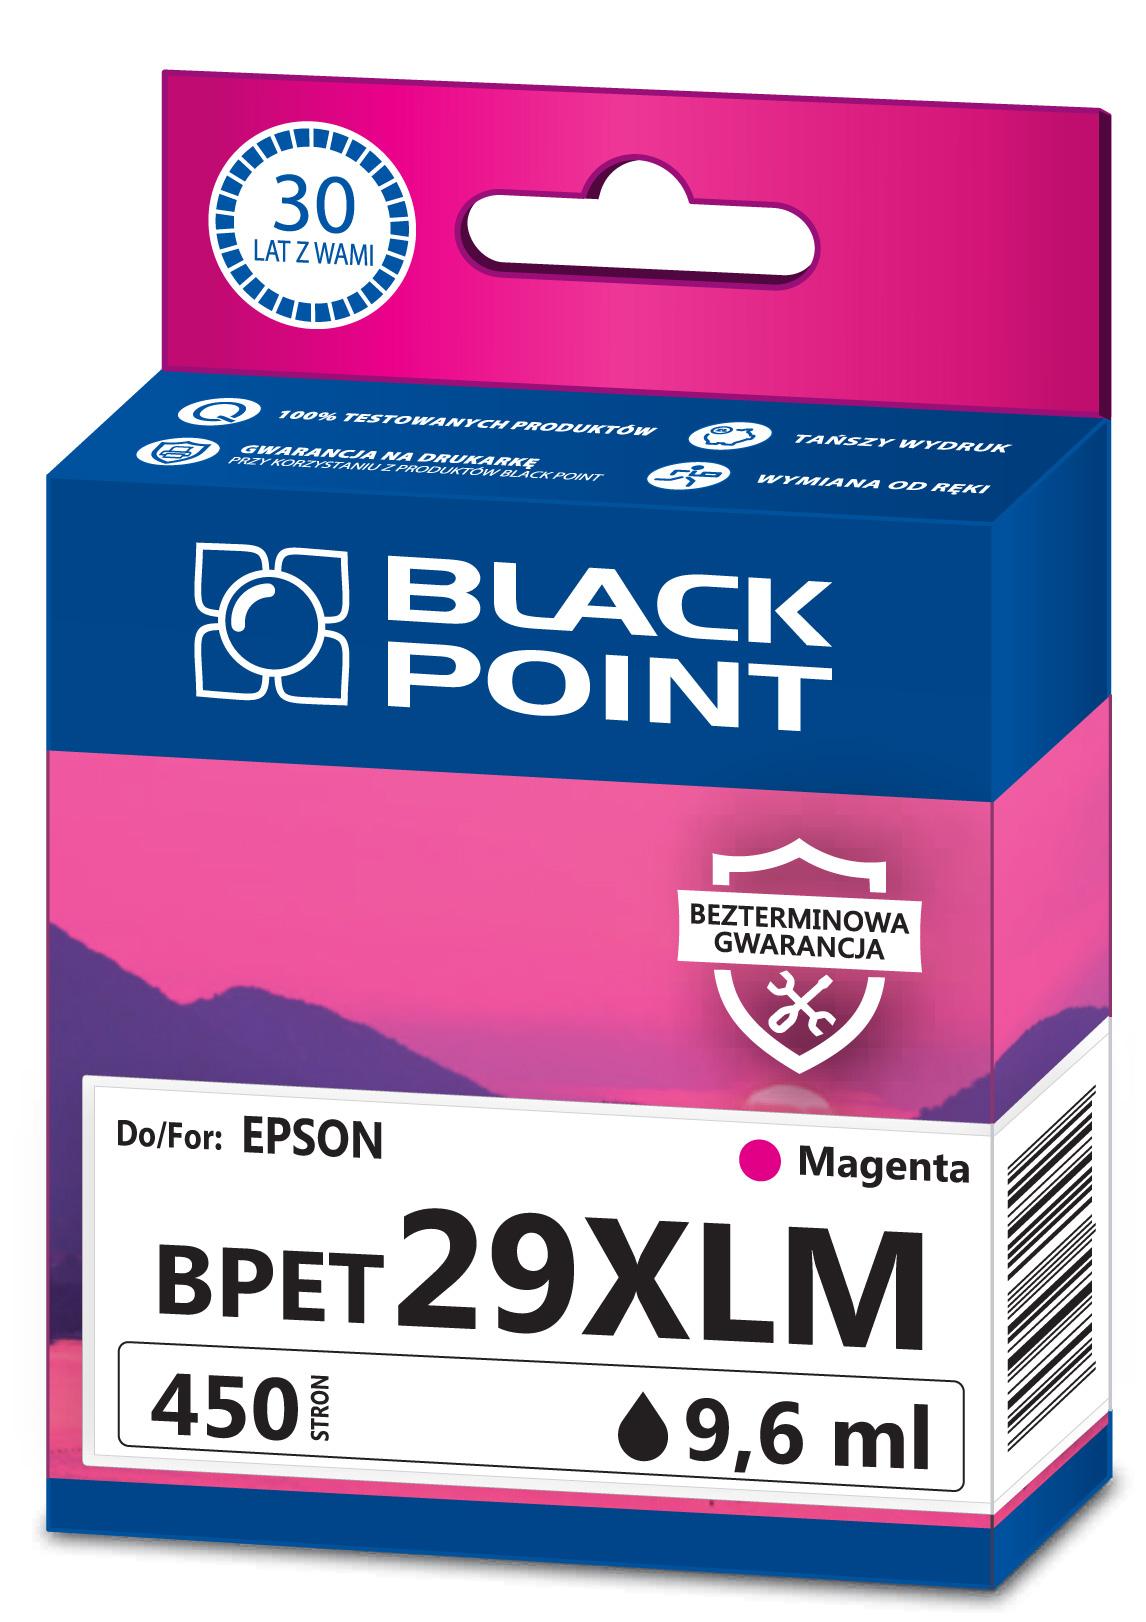 Kartridż magenta Black Point BPET29XLM (Epson C13T29934012), 450 str.